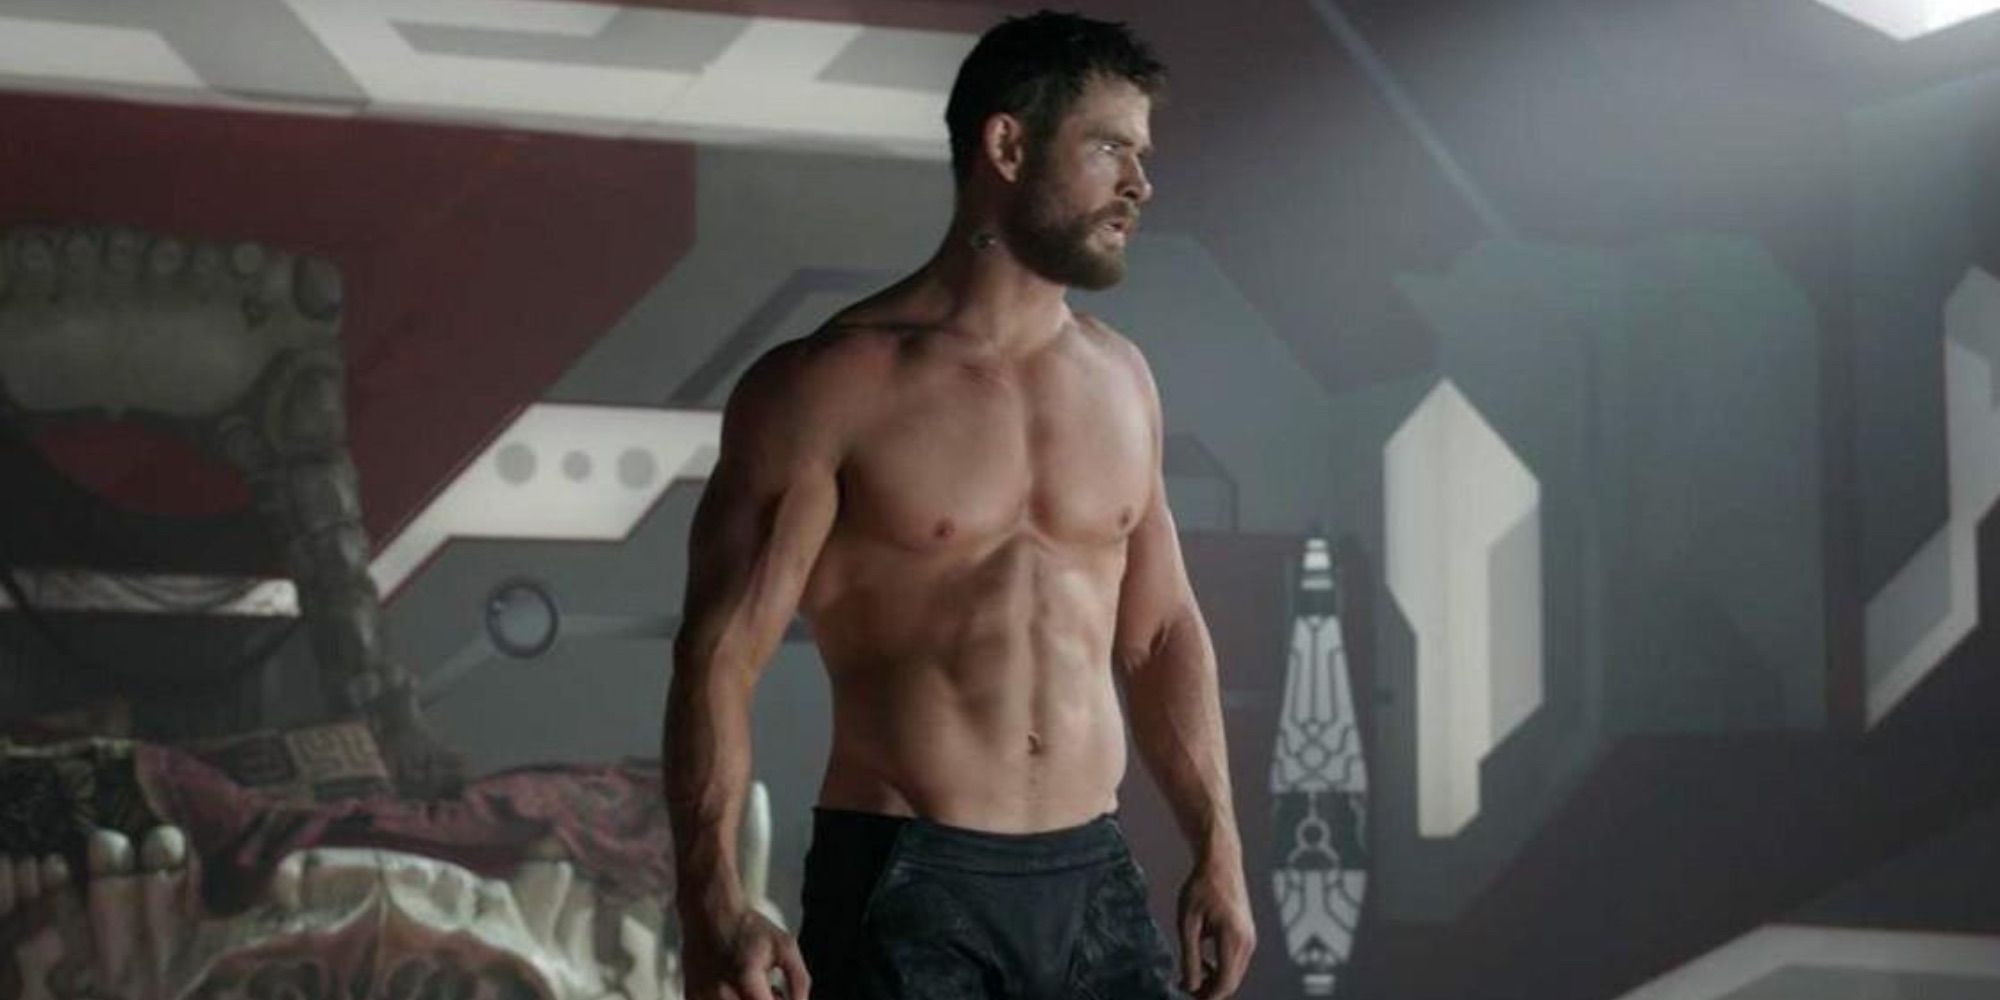 Chris Hemsworth as Thor in Avengers: Infinity War